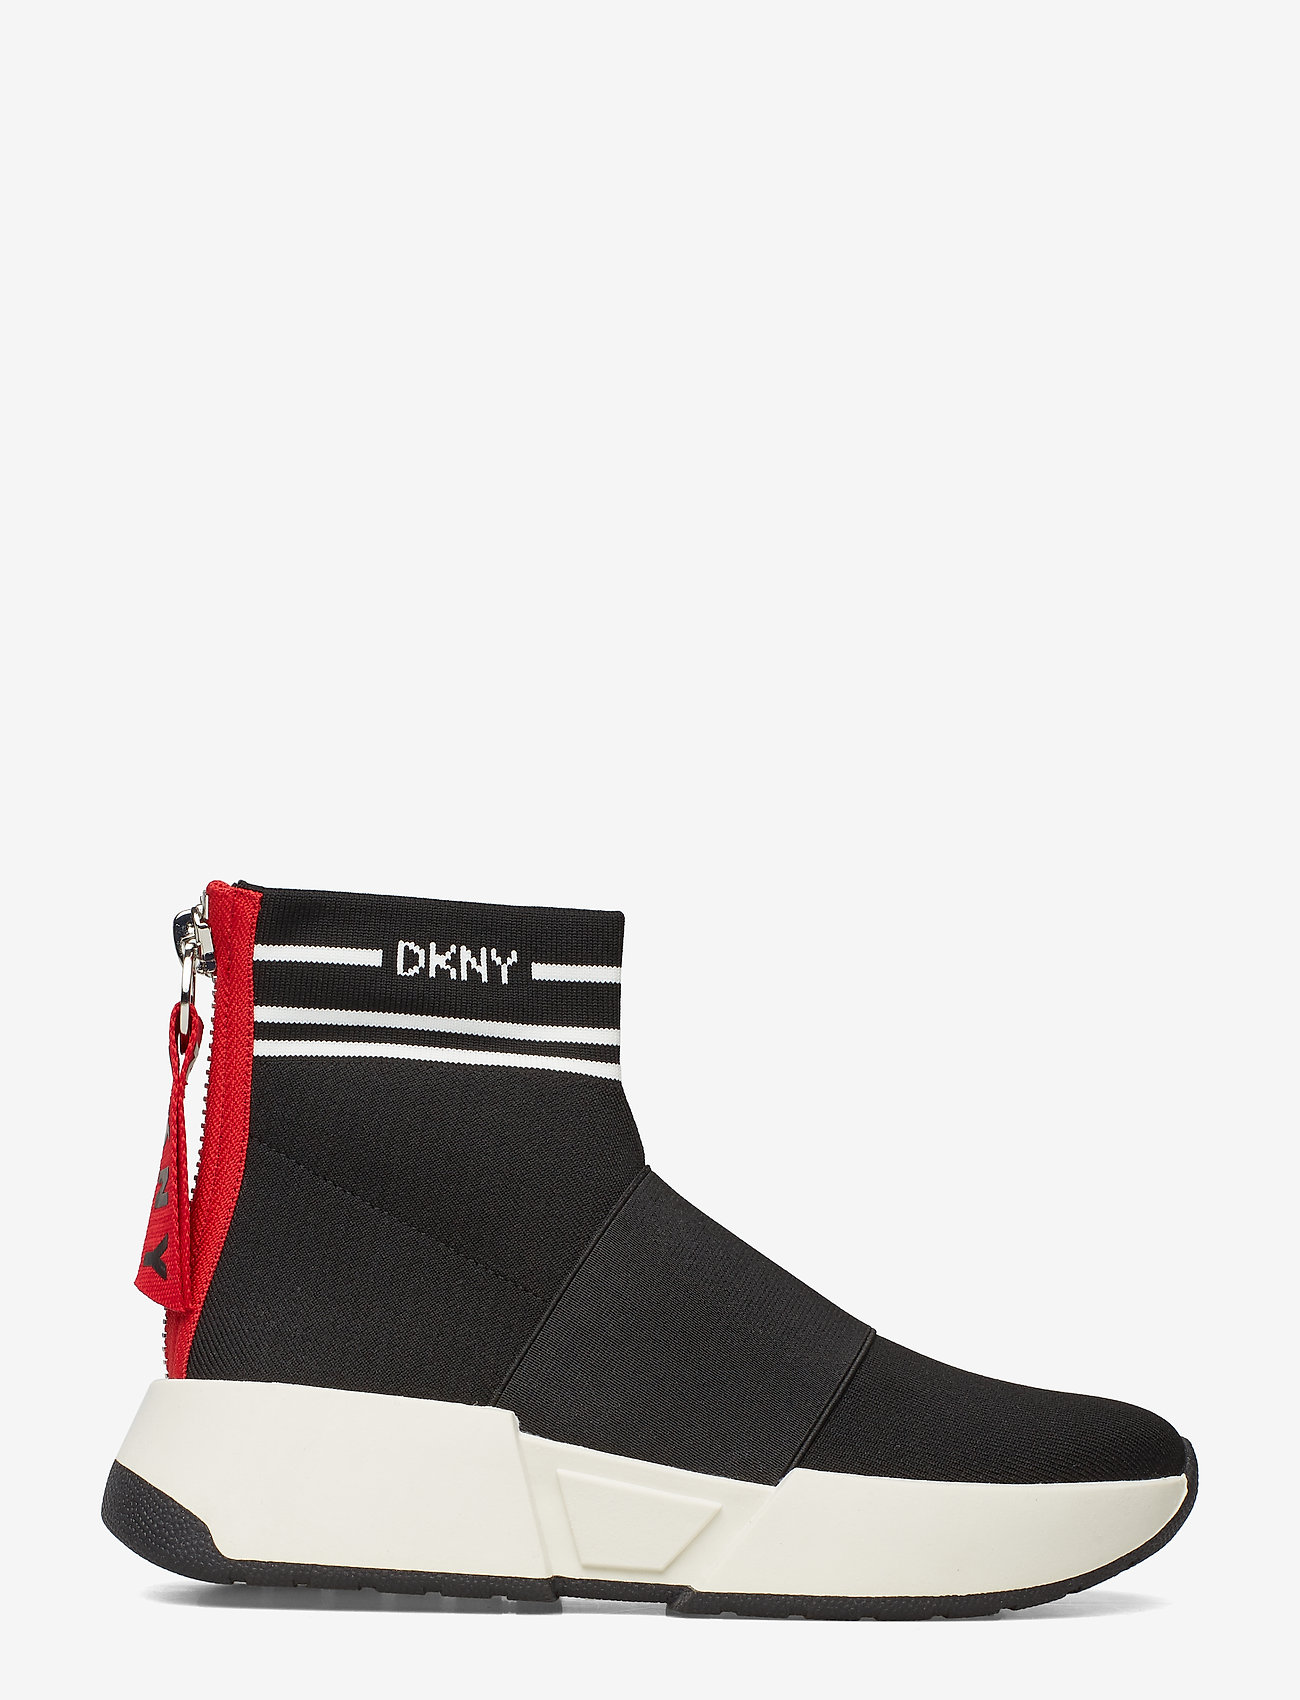 DKNY Marini - High top sneakers | Boozt.com